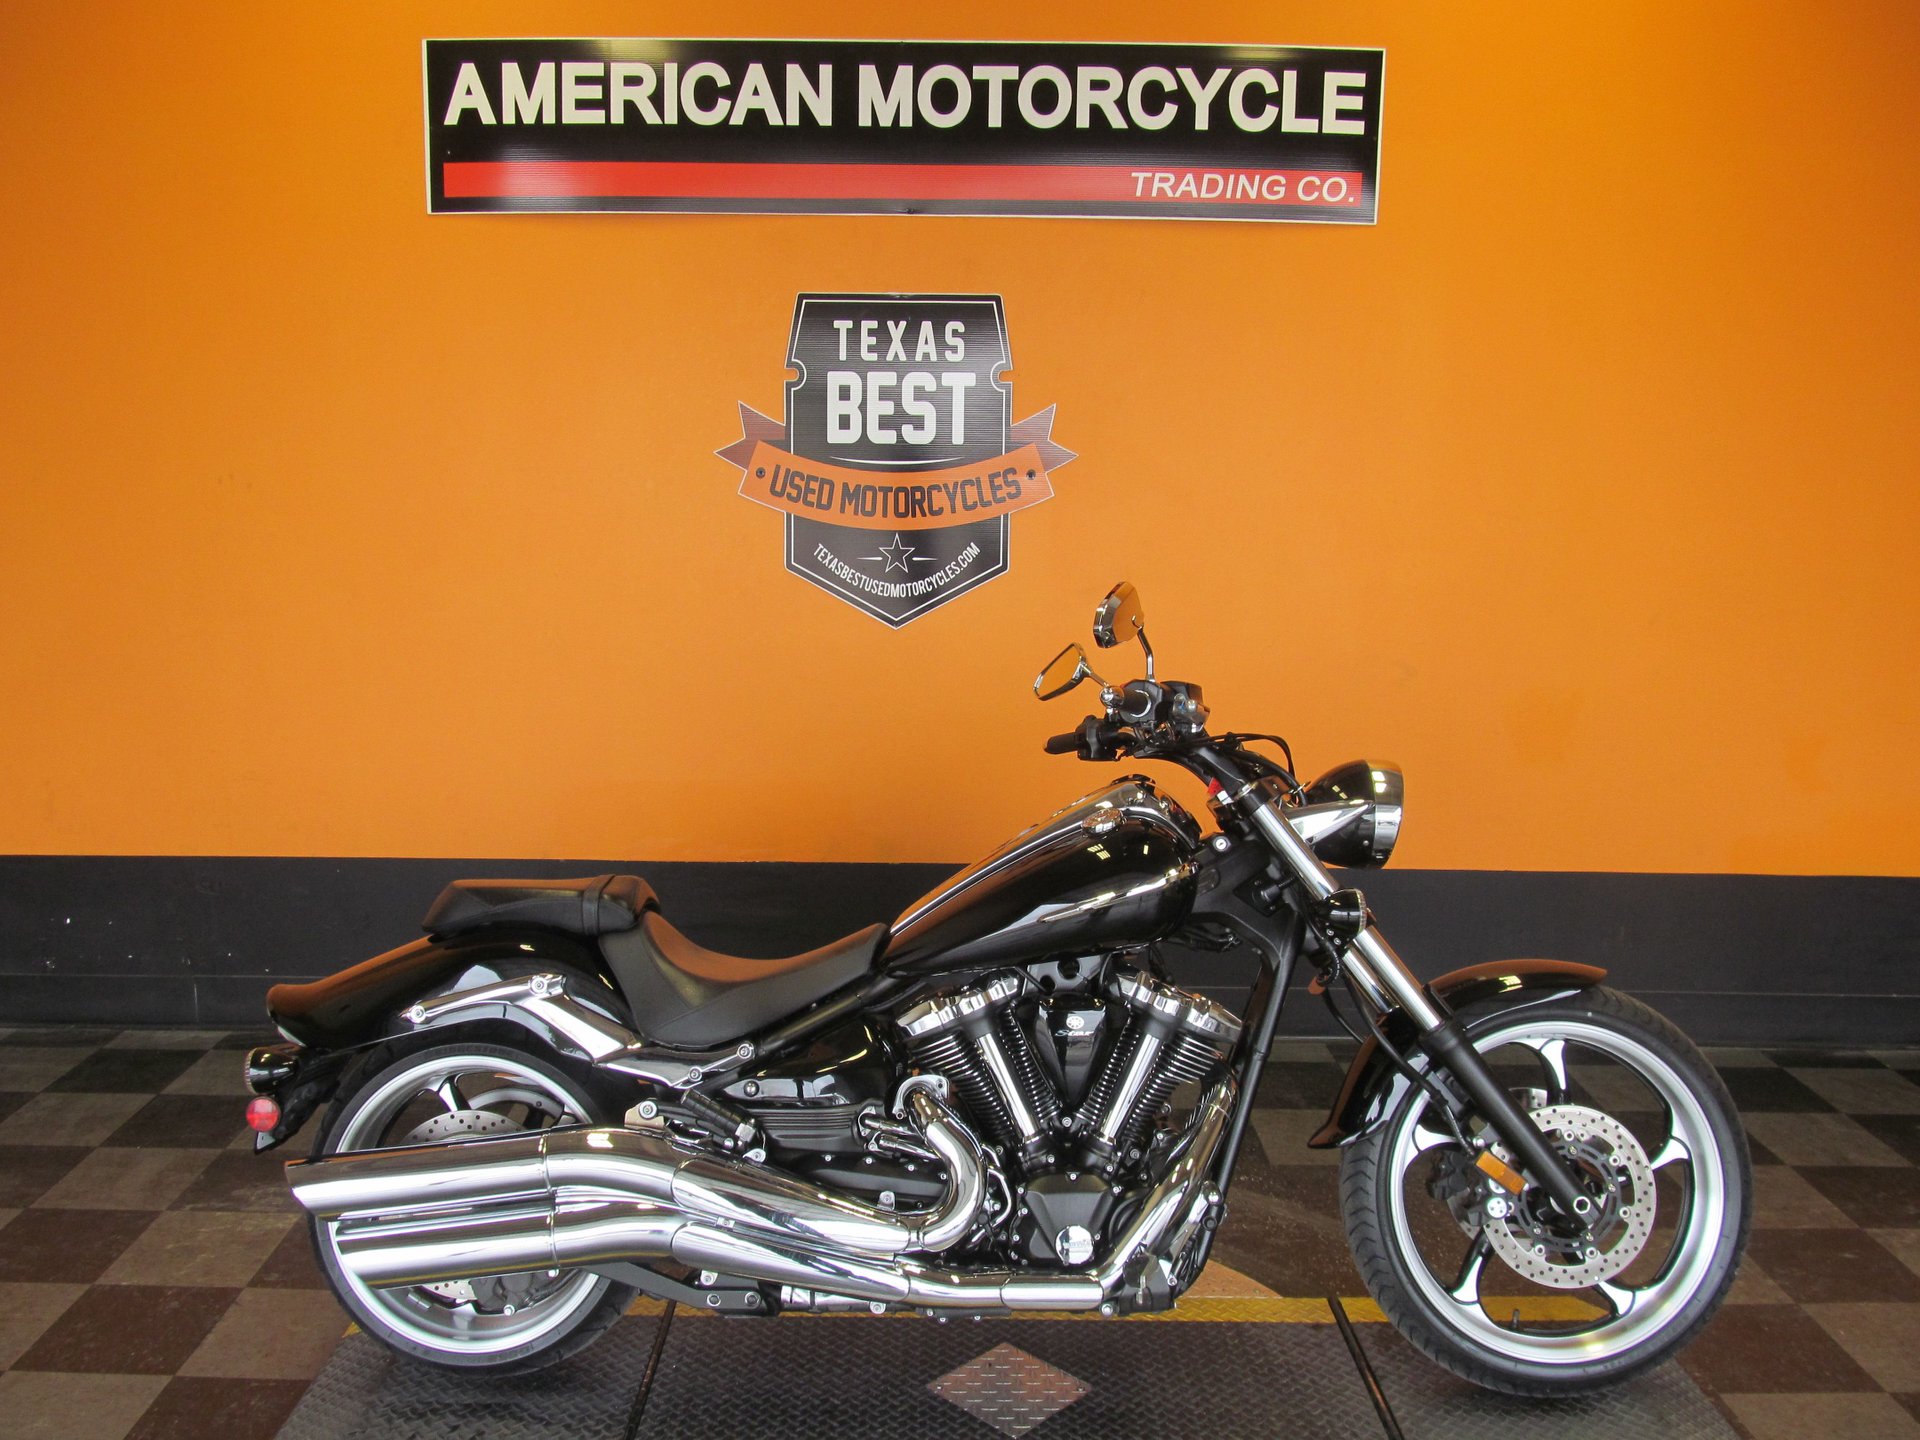 2008 Yamaha Raider | American Motorcycle Trading Company - Used Harley ...